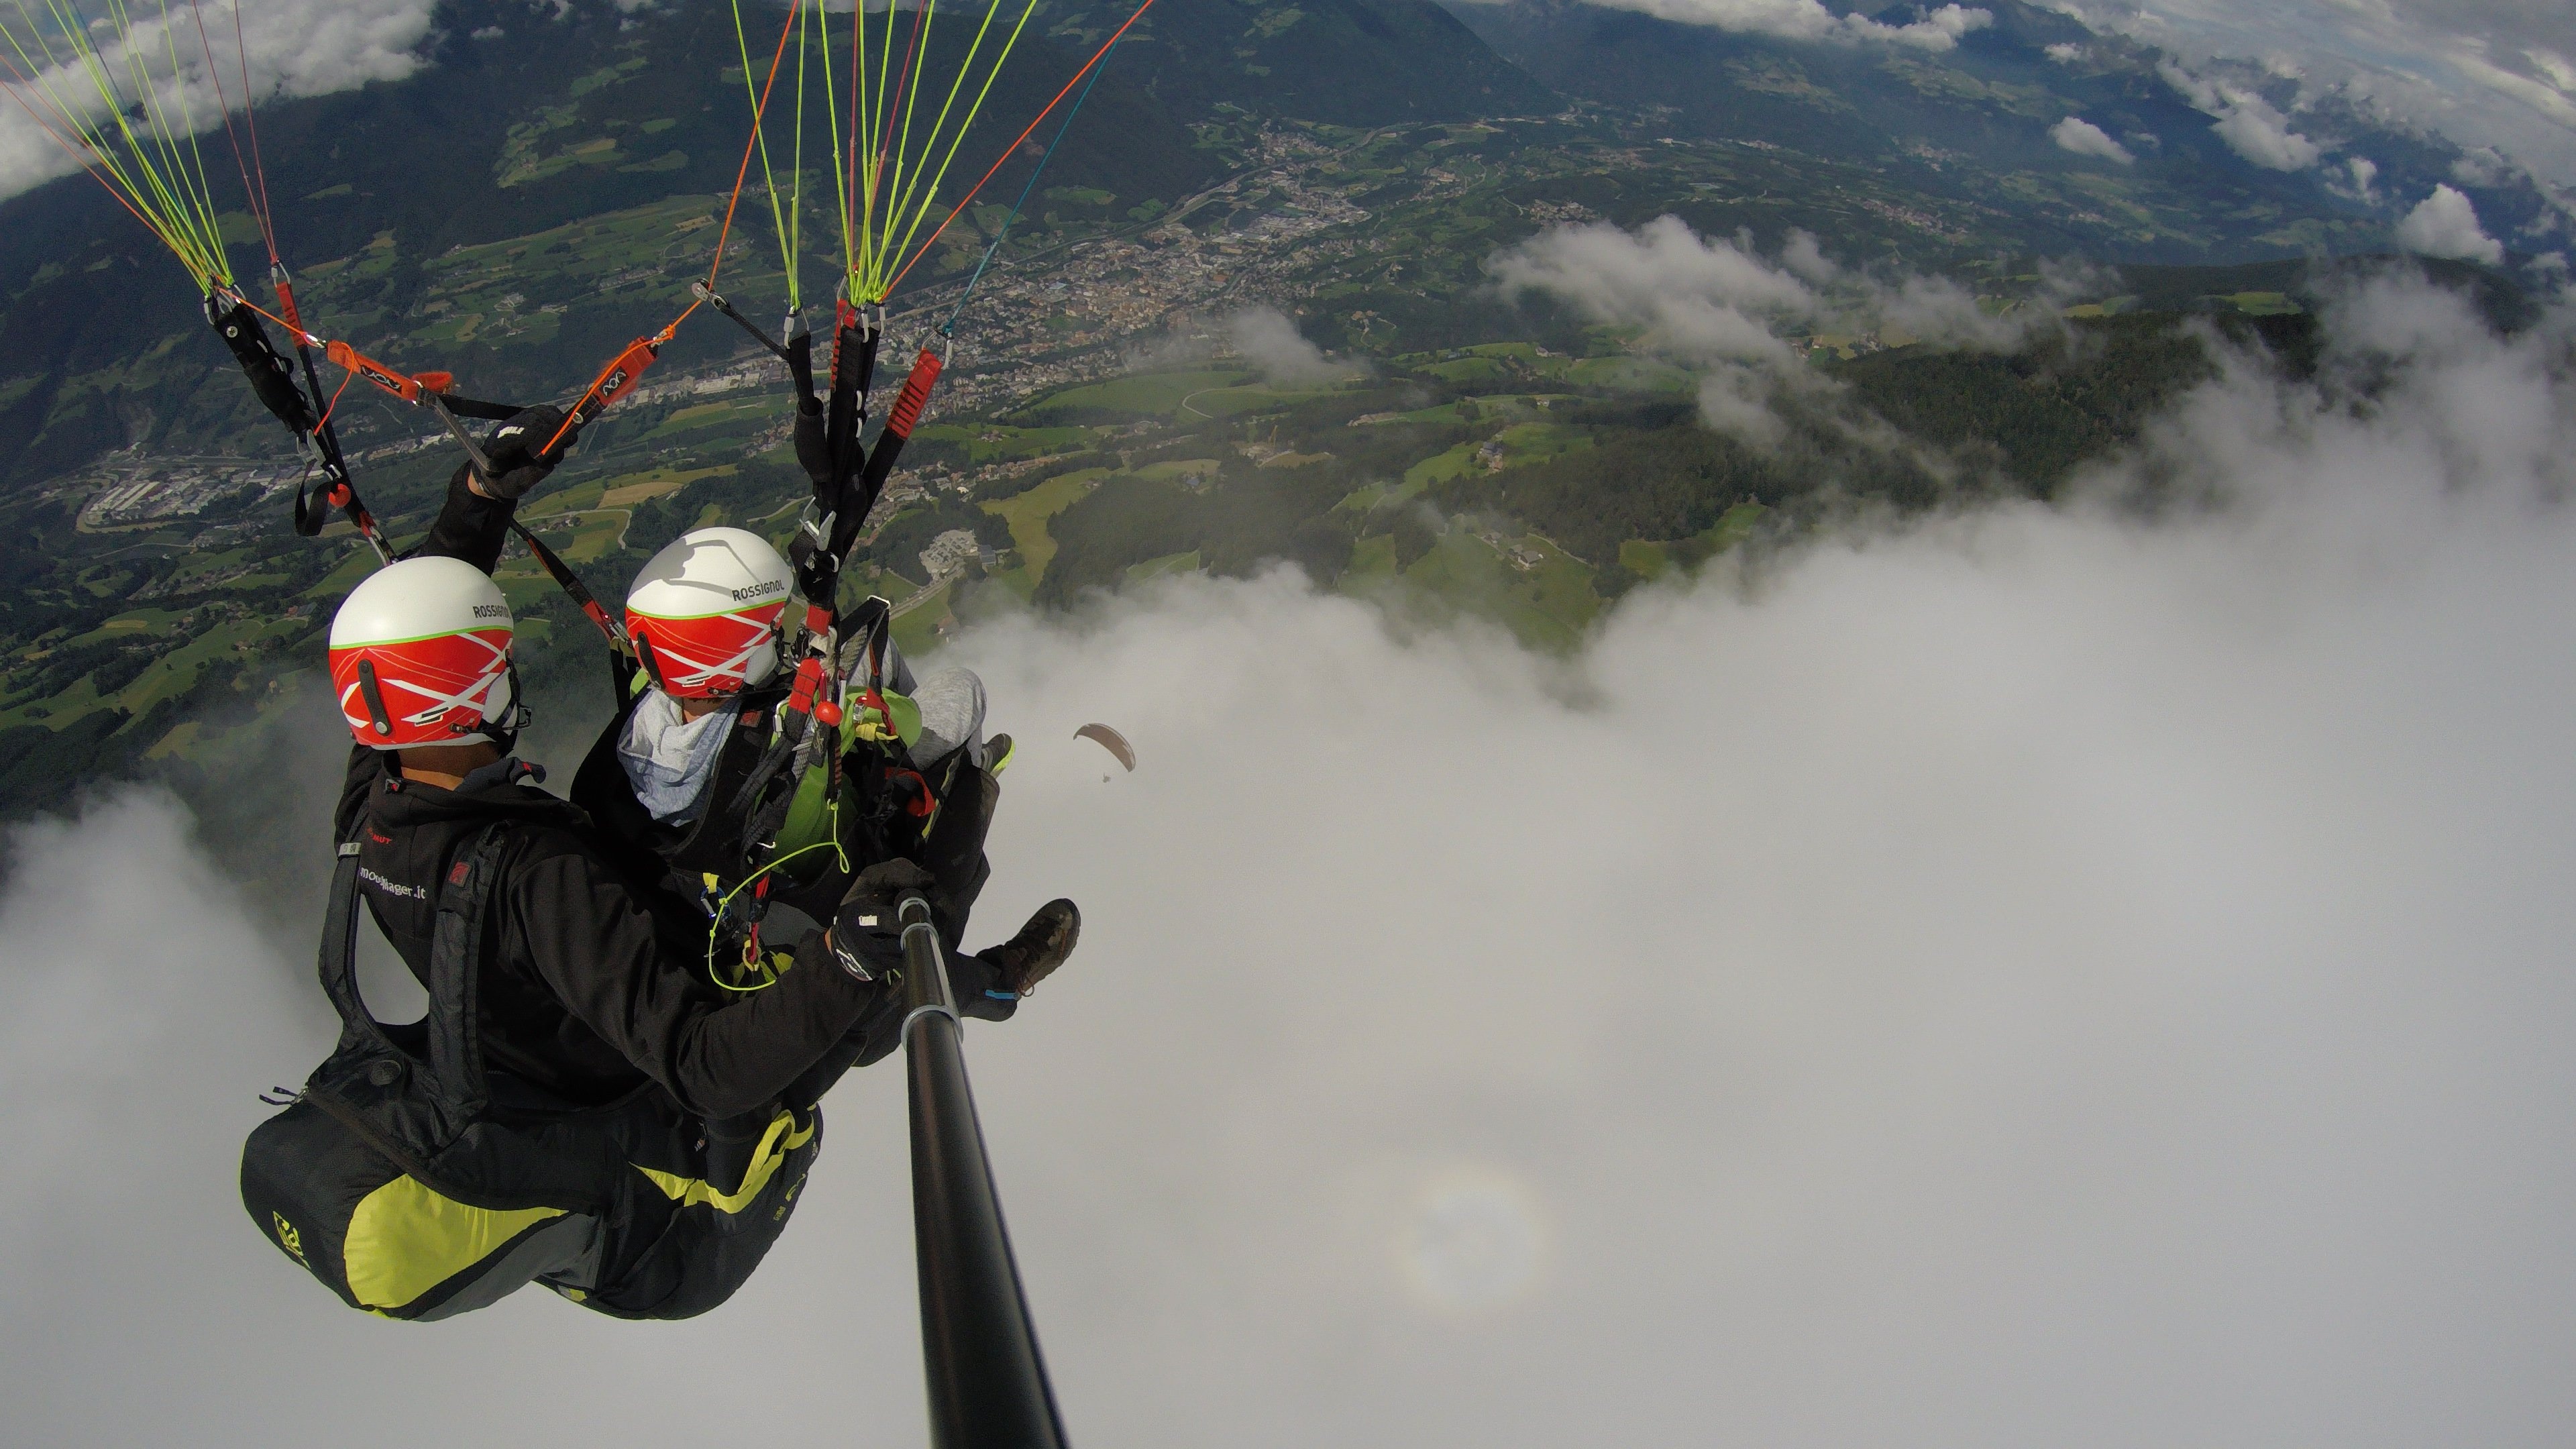 Paragliding: Tandem Team training, South Tyrol, Northern Italy. 3840x2160 4K Wallpaper.